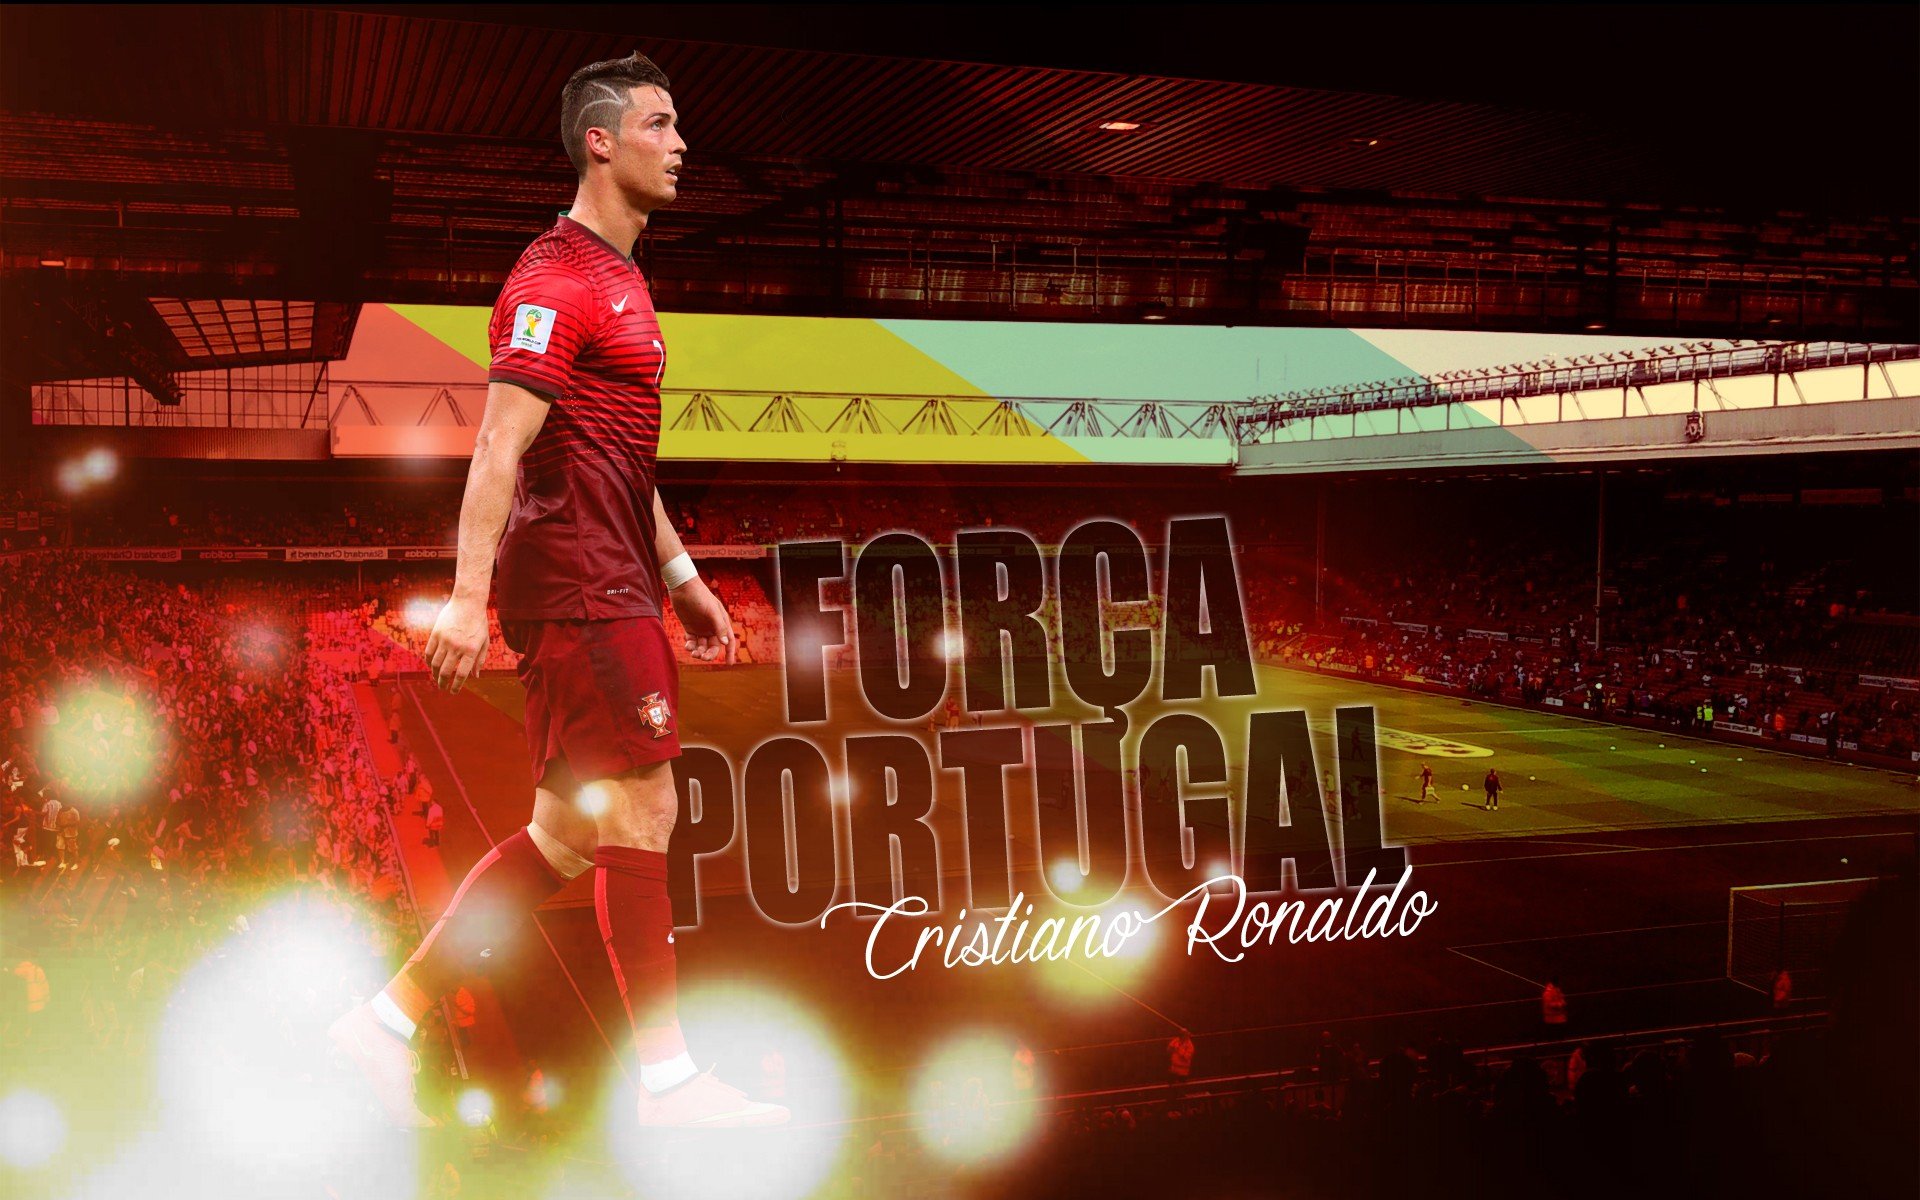 Portugal, Ronaldo, Cristiano Ronaldo, Photo manipulation Wallpaper